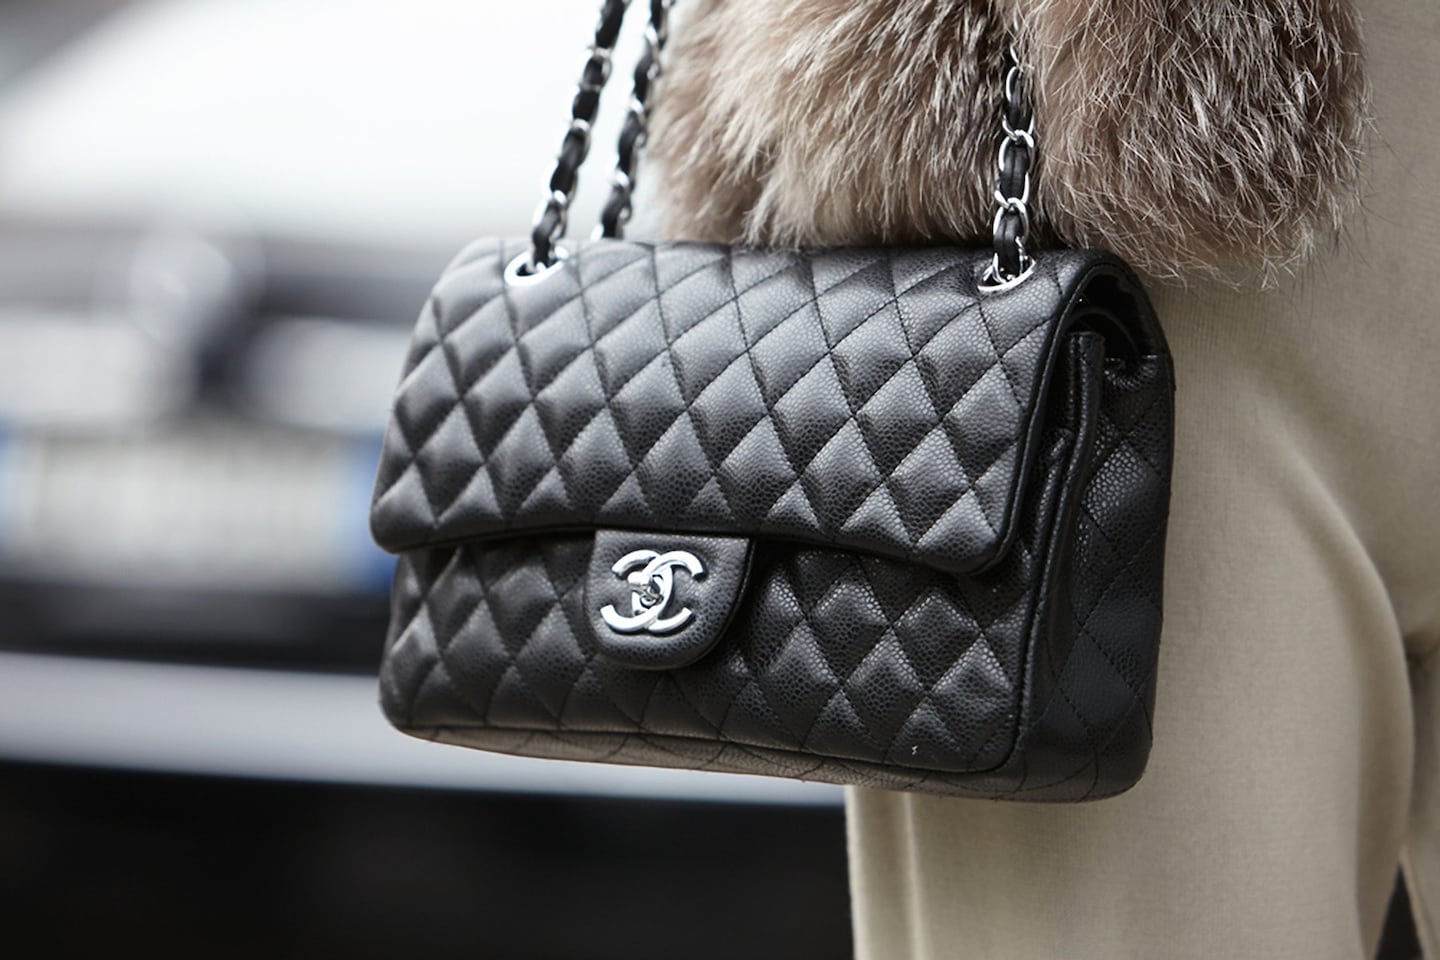 Chanel handbag | Source: Shutterstock